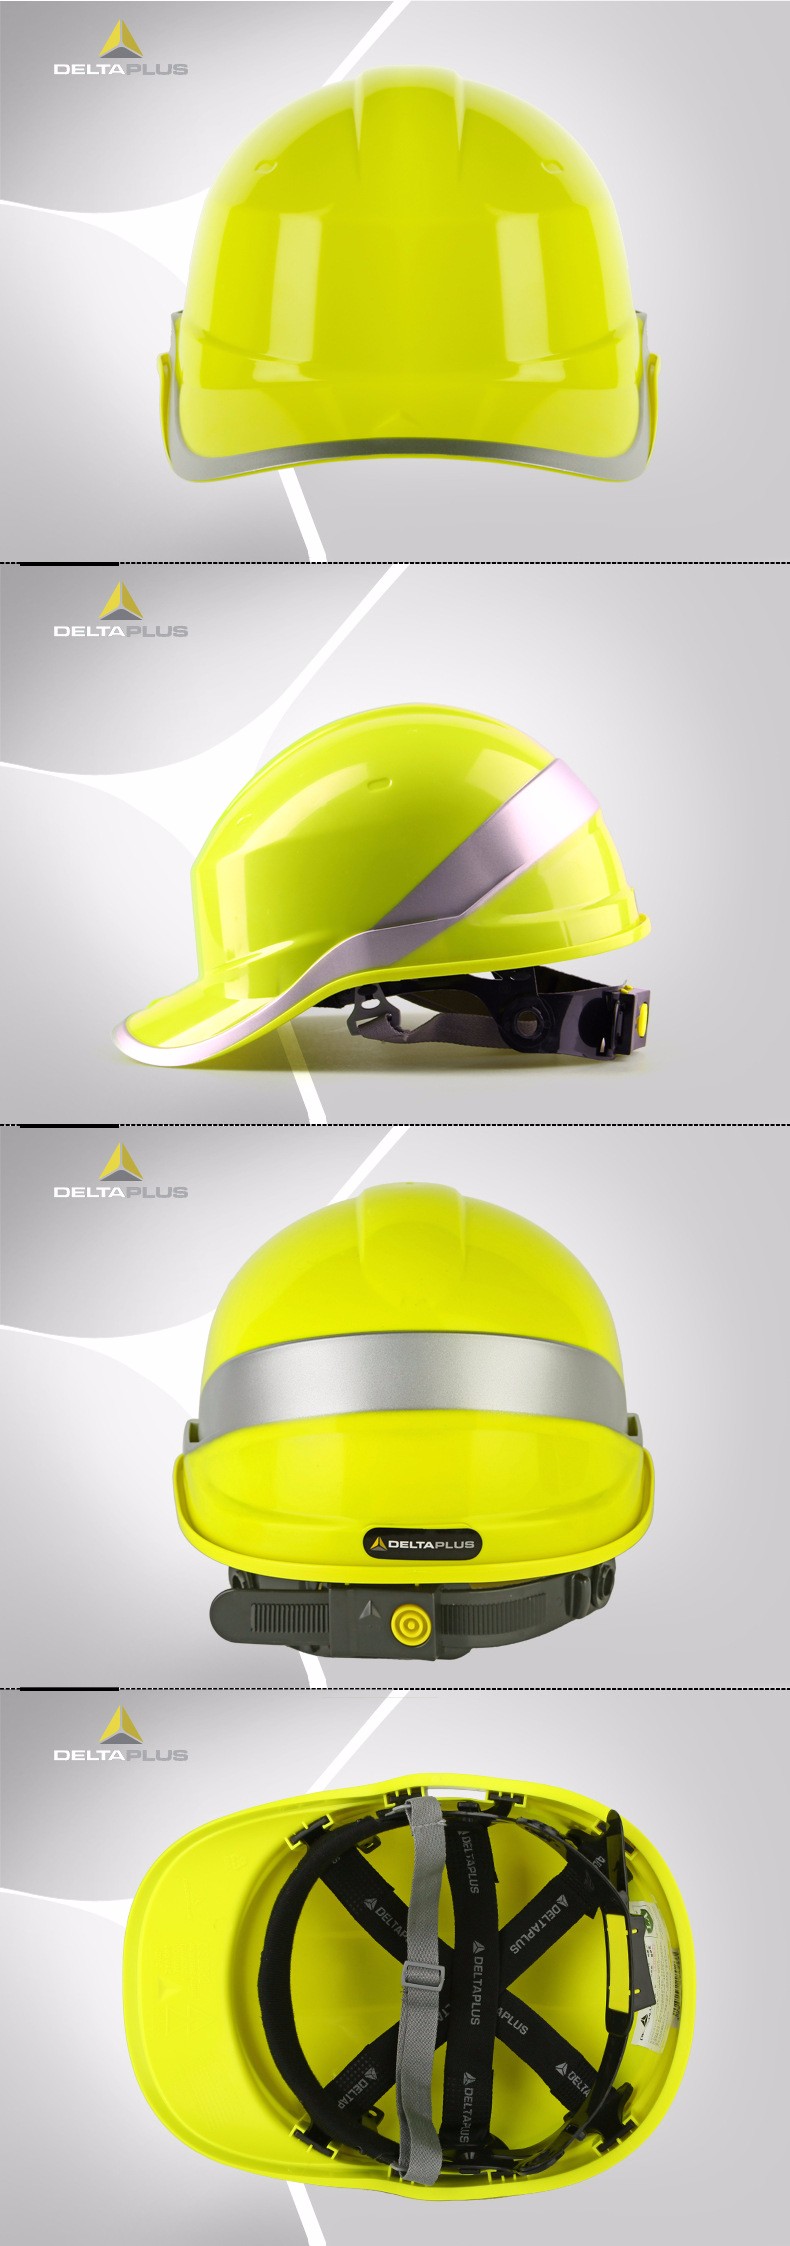 Deltaplus DIAMOND V Venitex Construction Safety Helmet Hard Hat Work cap 102018 ABS insulation material with phosphor stripes (3)